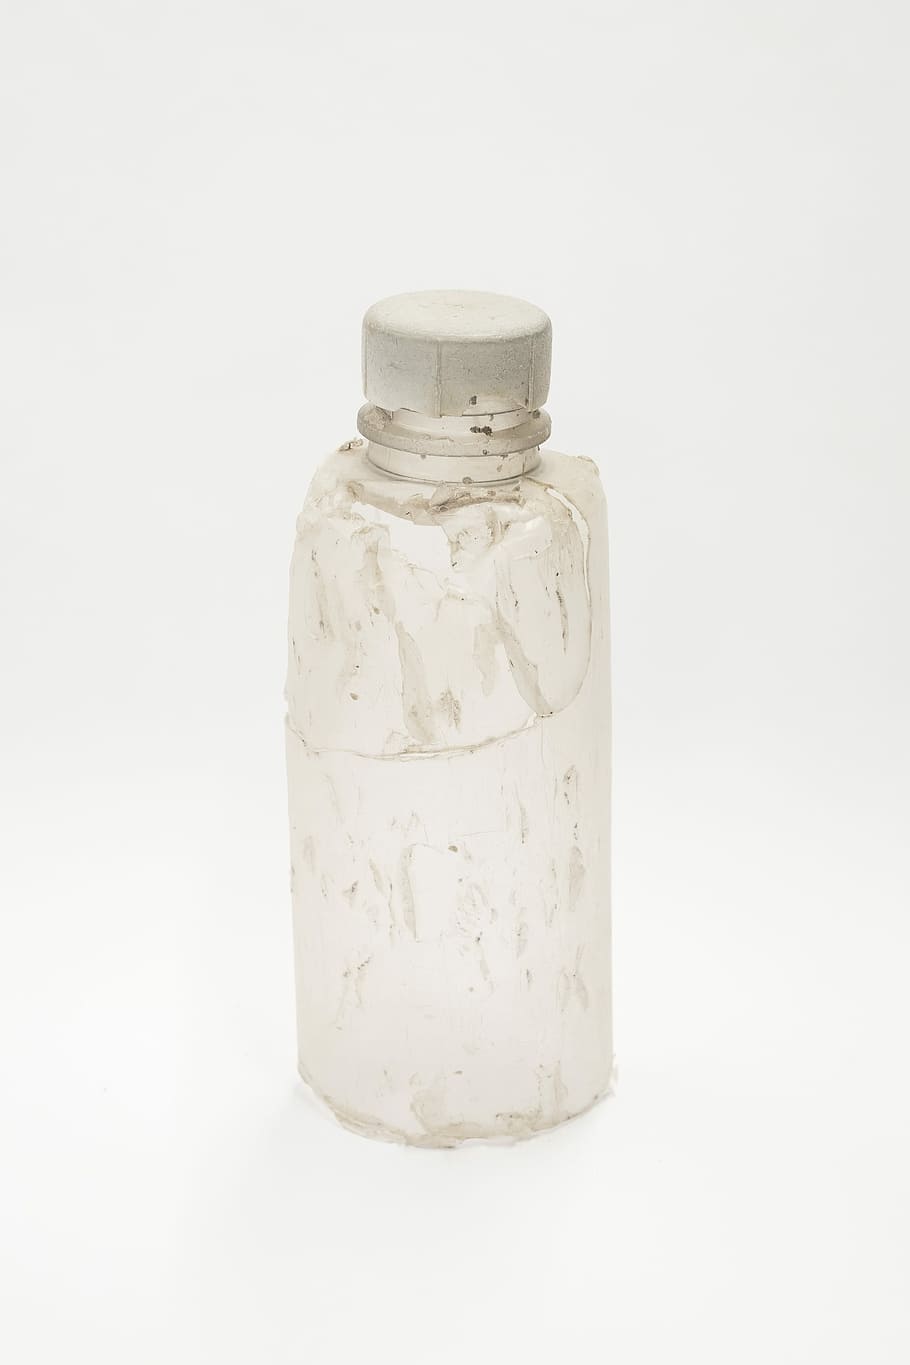 Ocean Plastic, clear water bottle with gray cap, damaged bottle